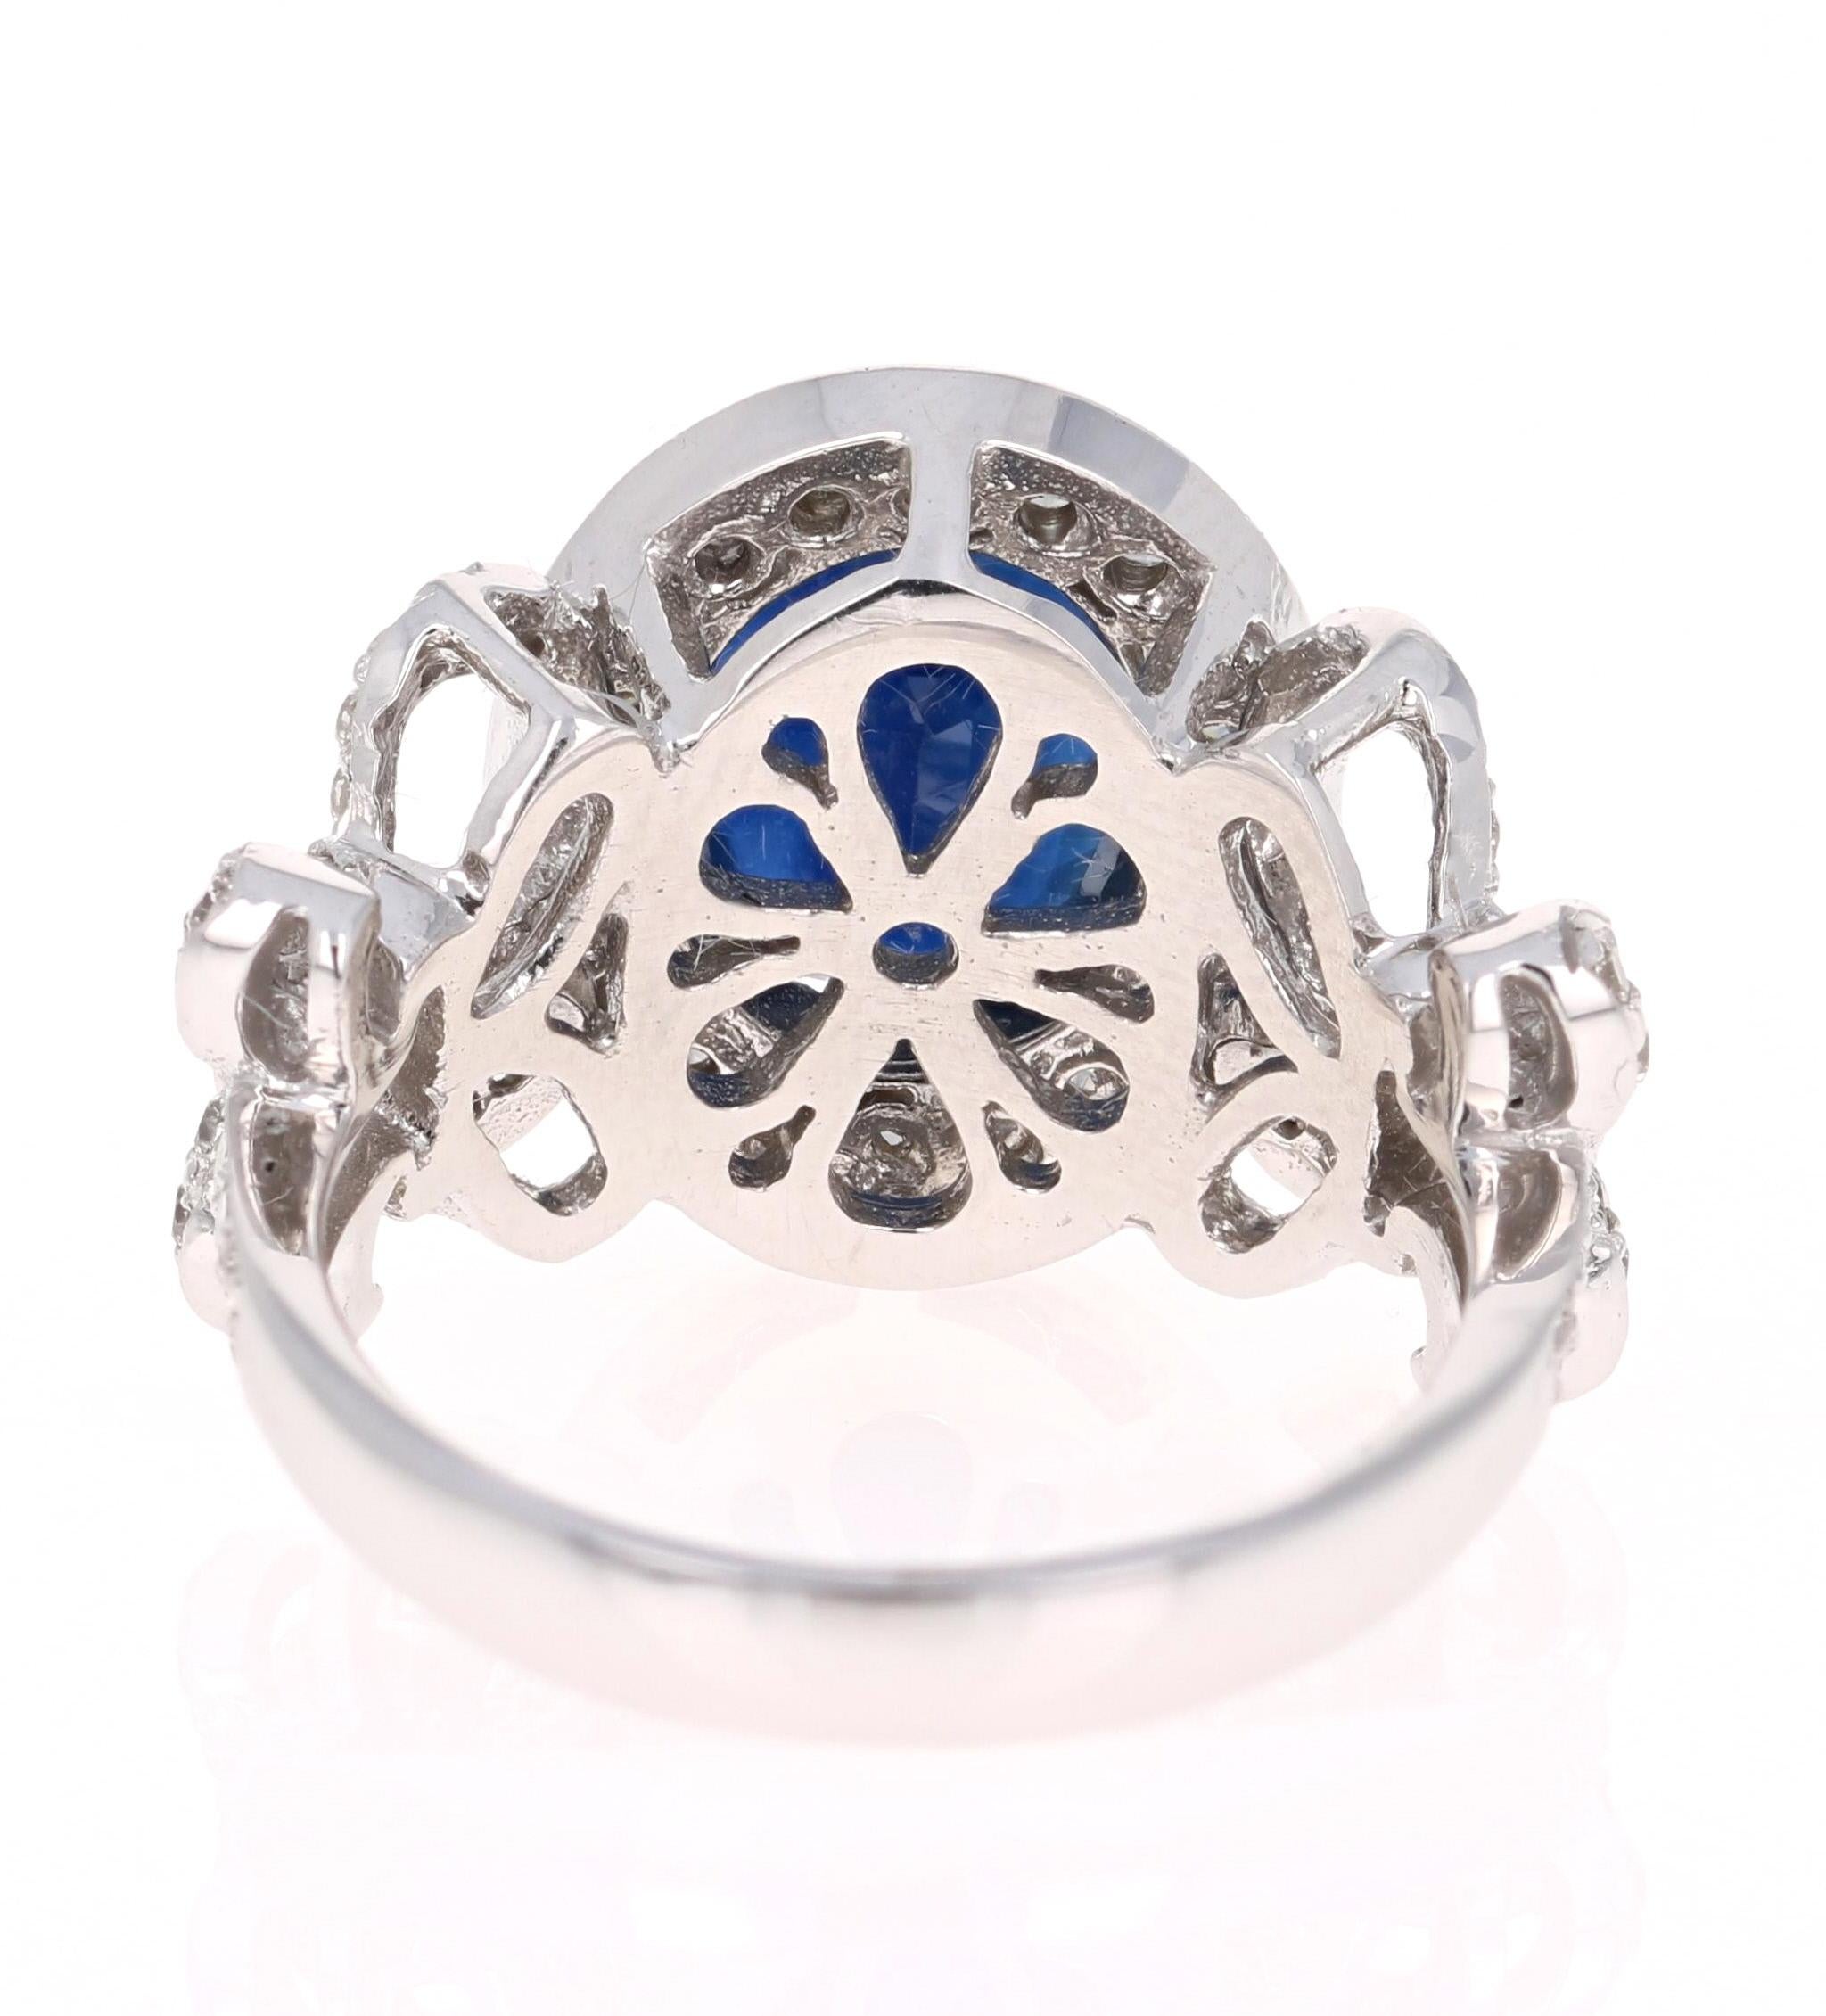 Oval Cut 4.53 Carat Blue Sapphire Diamond 14 Karat White Gold Ring